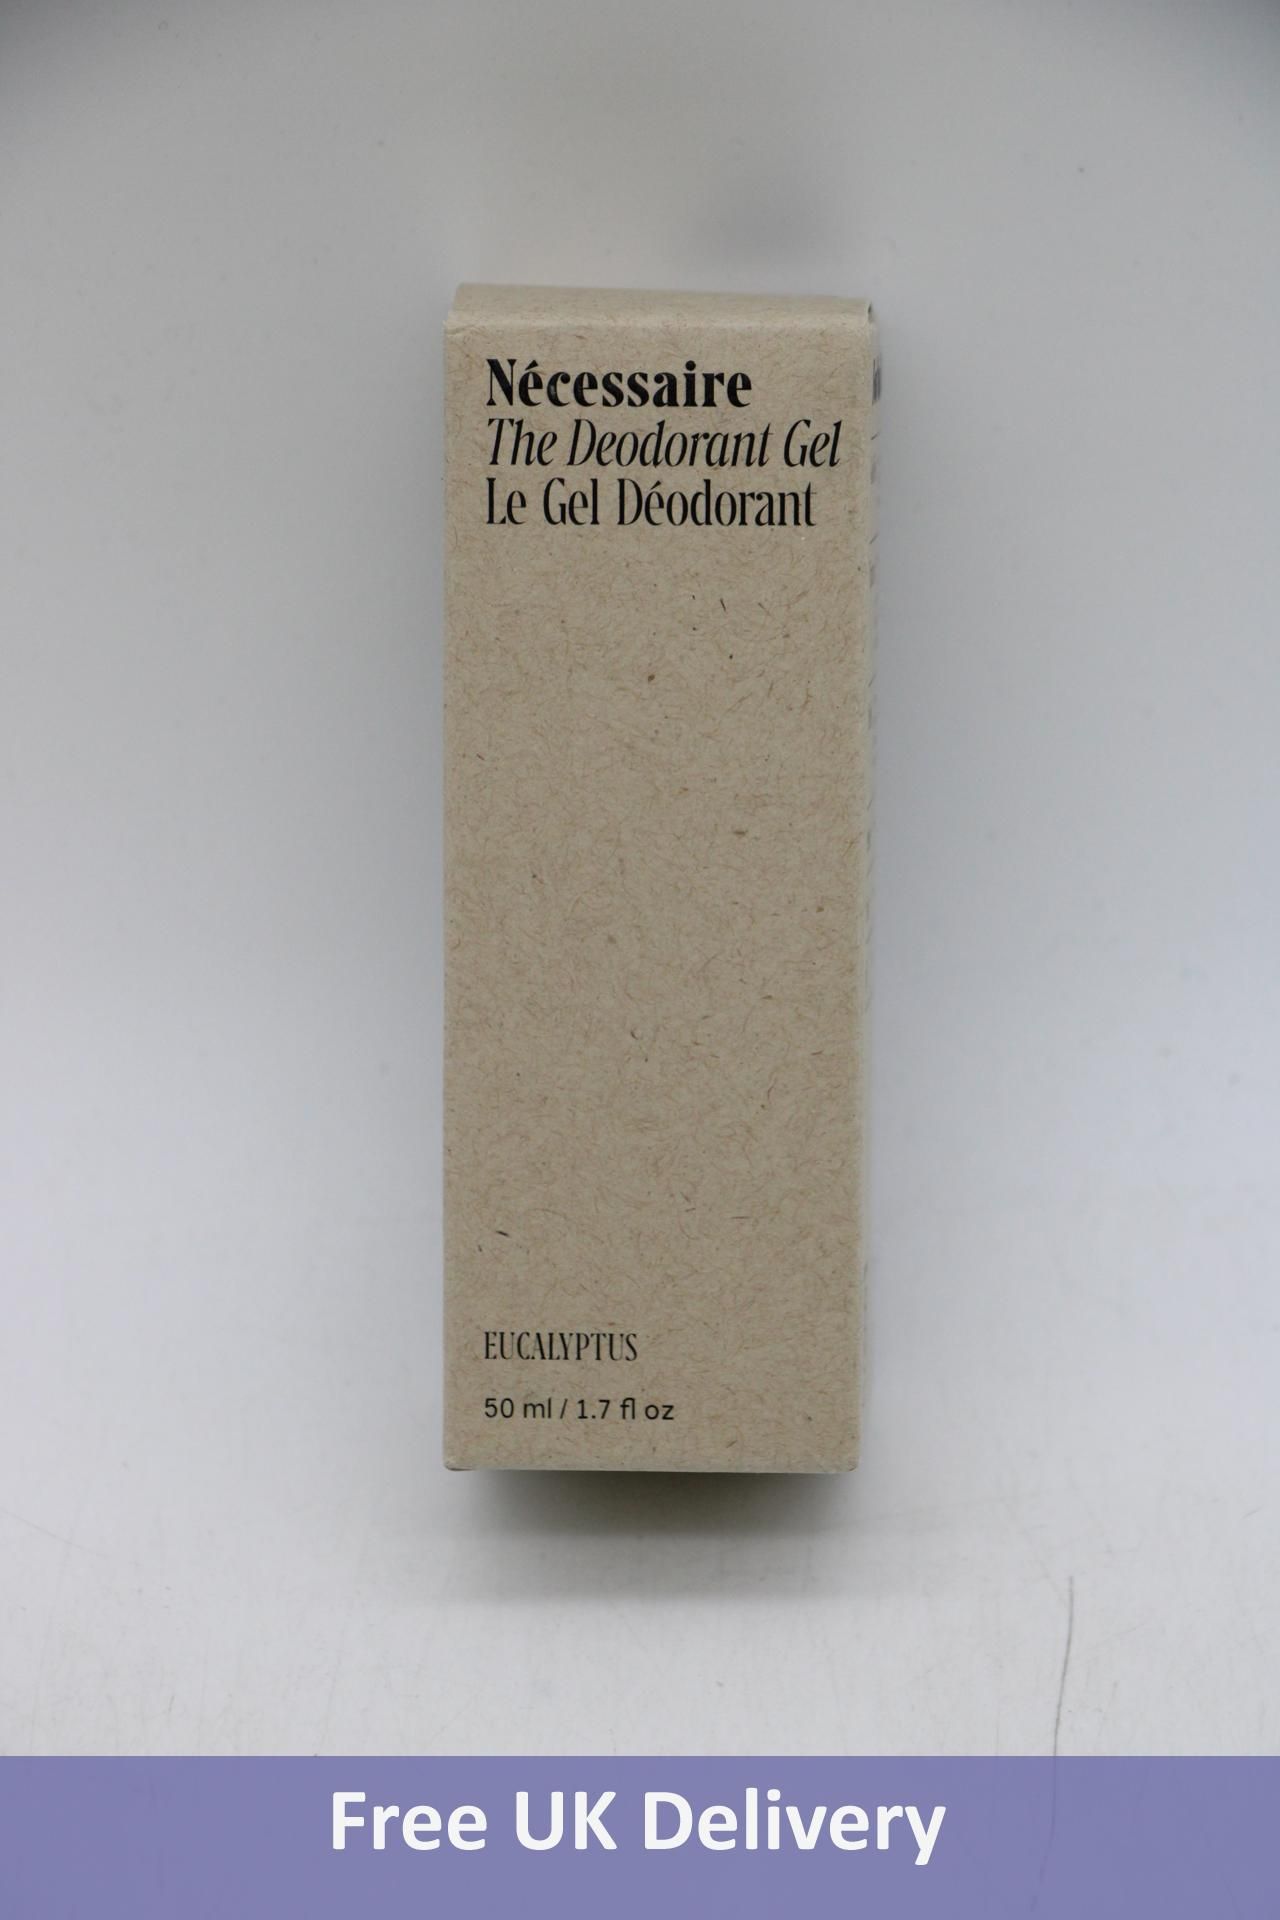 Fifteen bottles of Necessaire The Deodorant Gel Eucalyptus, Lime Green, Size 50ml - Image 5 of 5